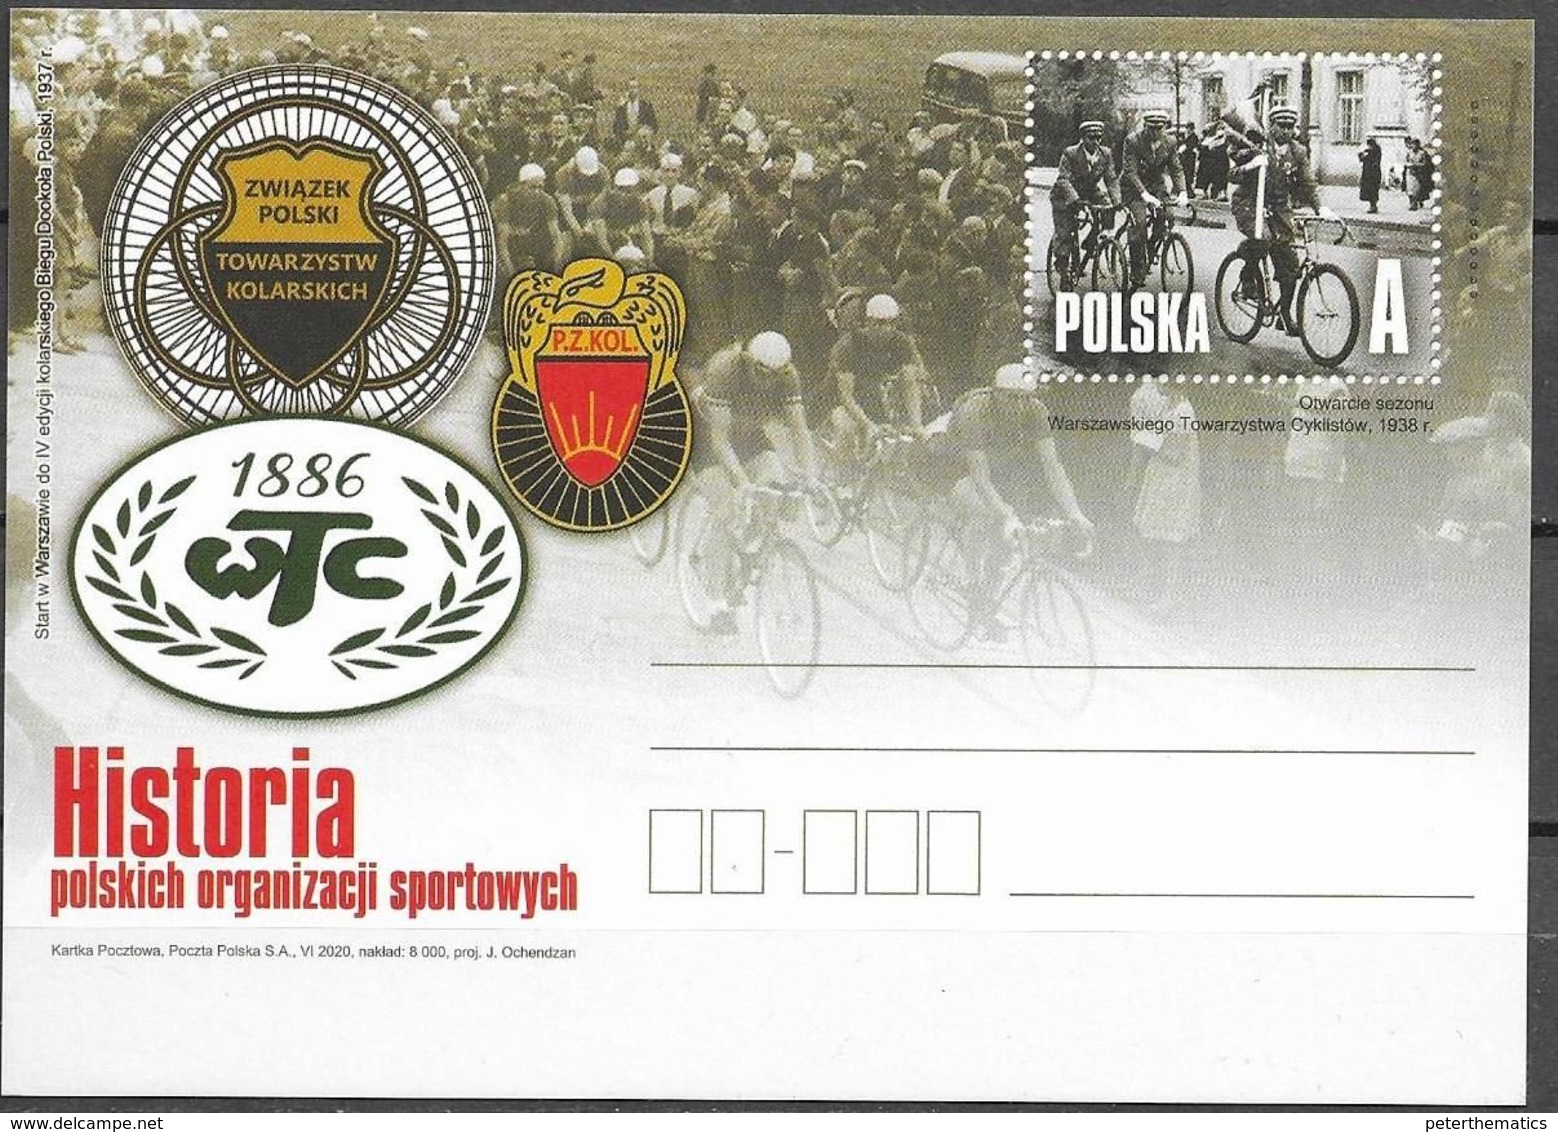 POLAND, 2020, MINT POSTAL STATIONERY, PREPAID POSTCARD, CYCLING, BICYCLES, HISTORY OF POLISH SPORT ORGANIZATIONS - Ciclismo